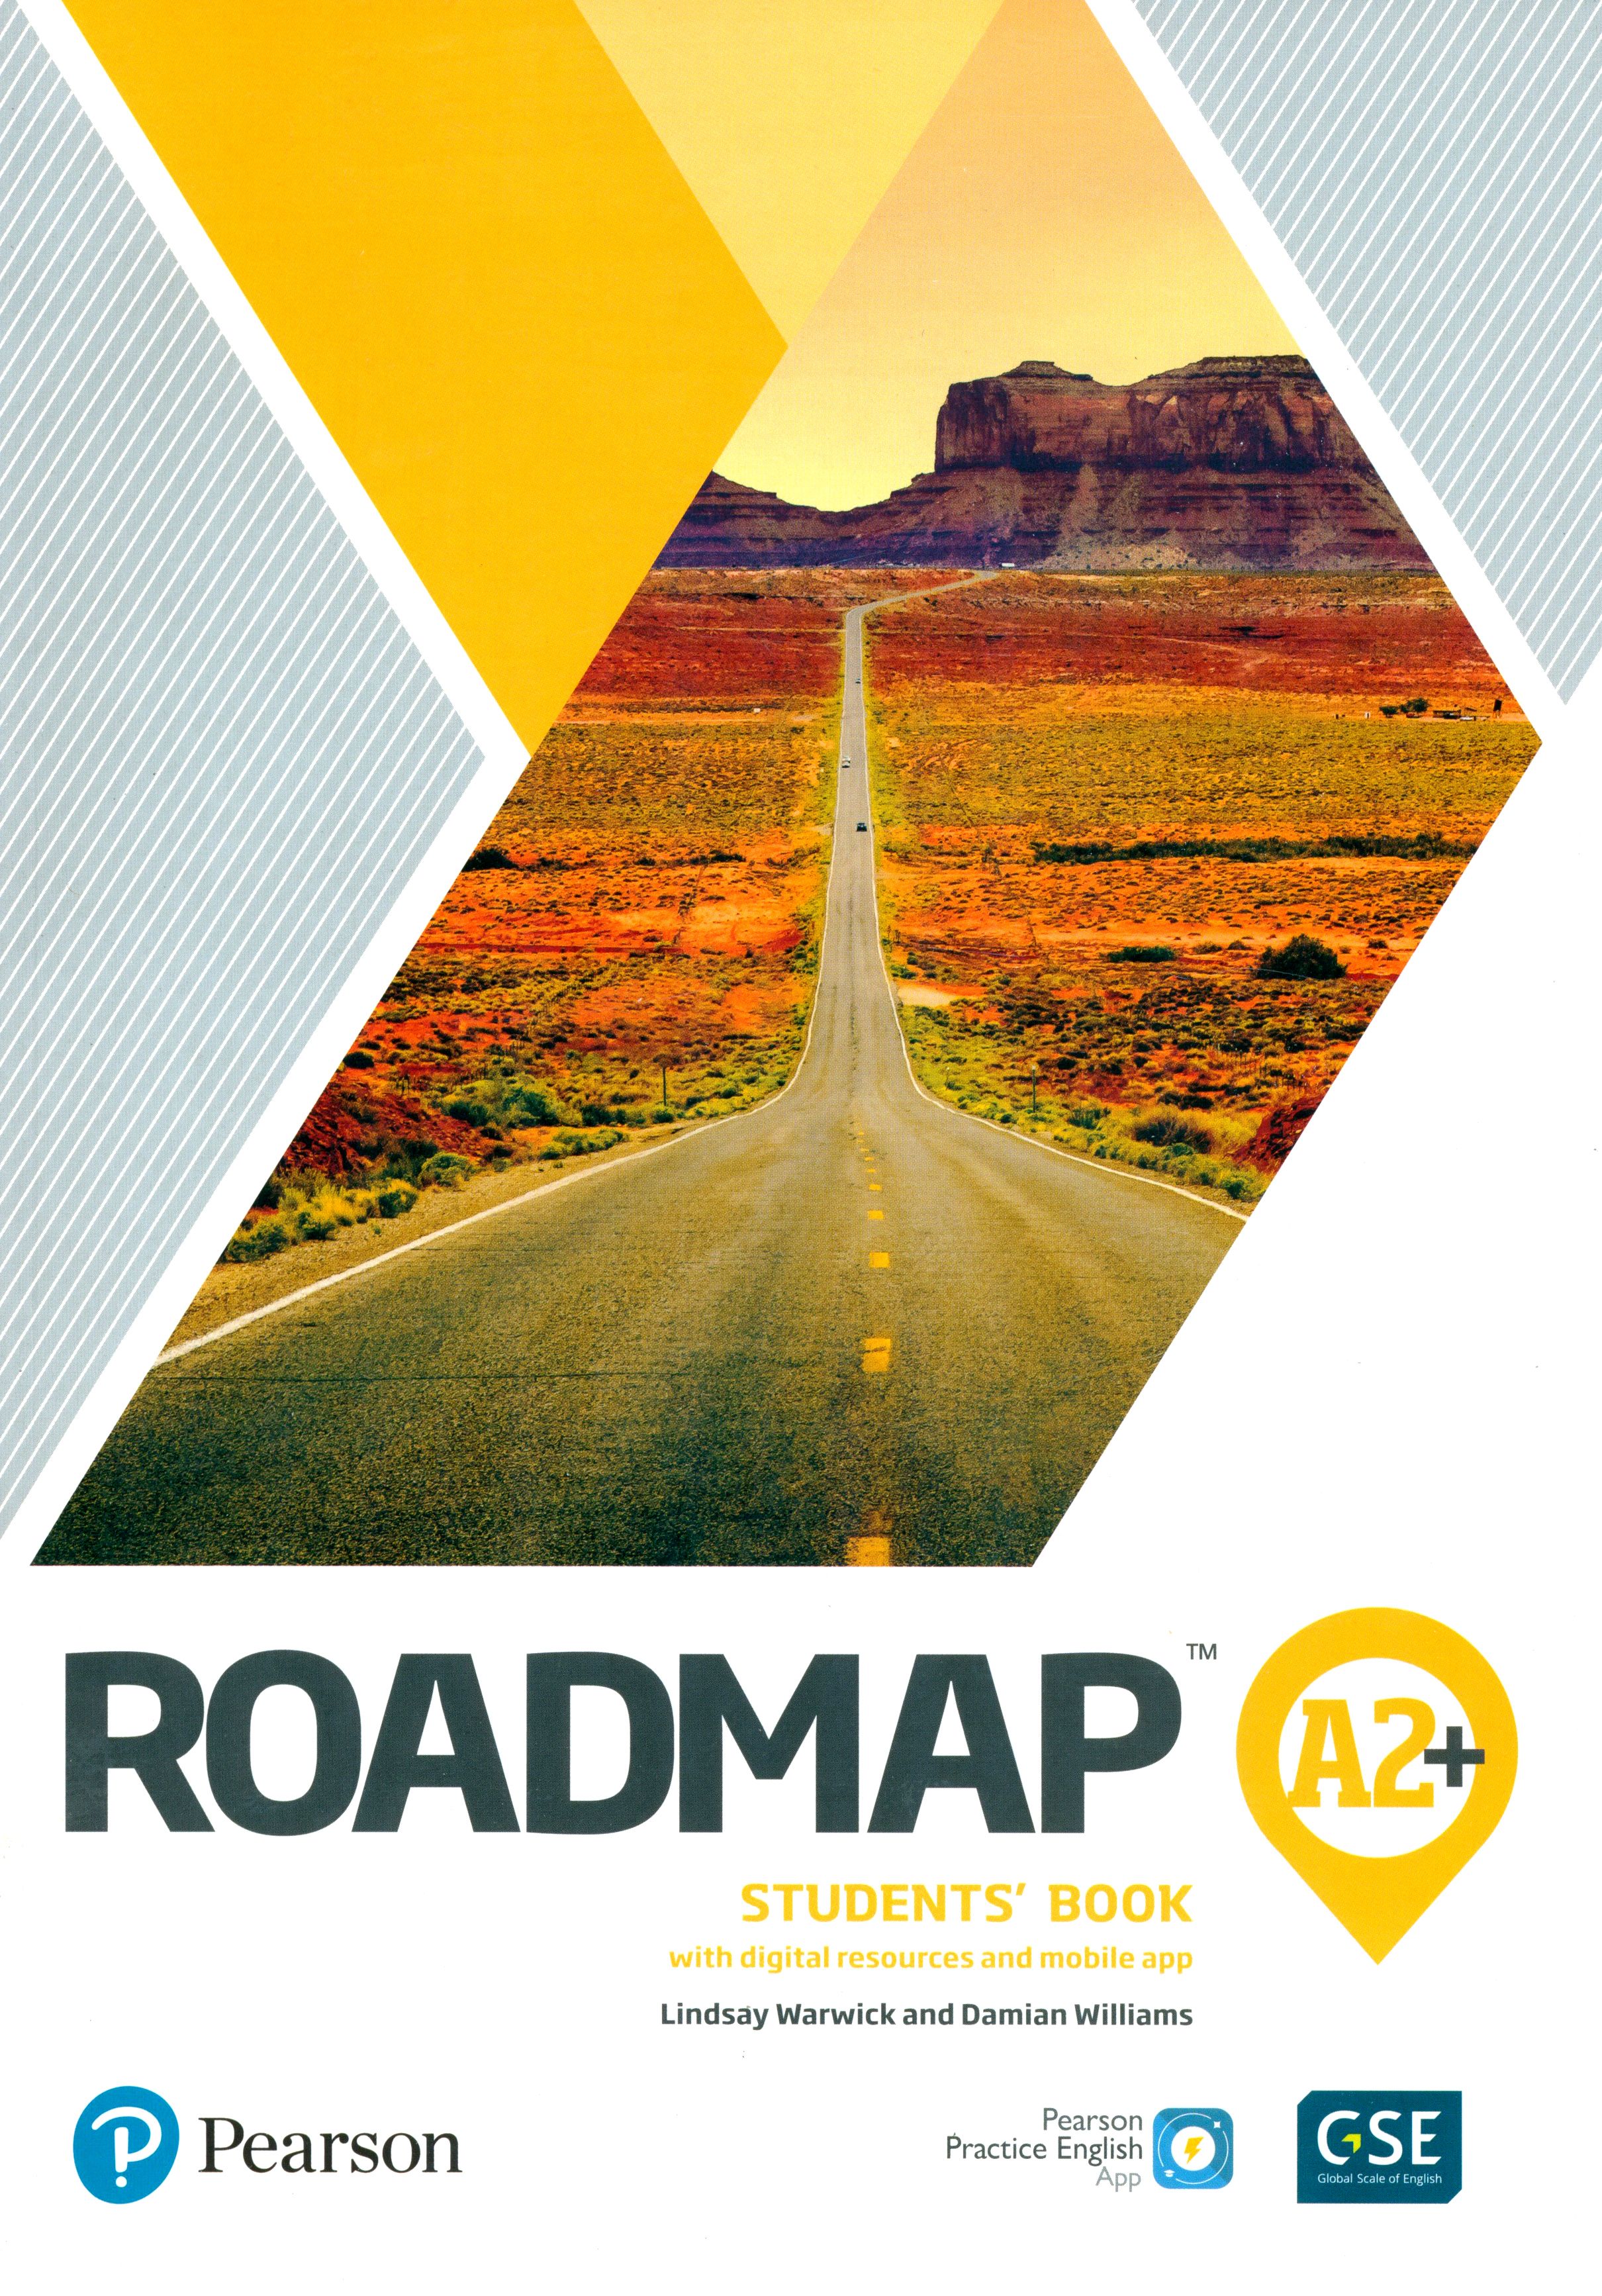 Roadmap student's book. Roadmap a2+ students' book. Roadmap books. Roadmap Workbook. Roadmap student book